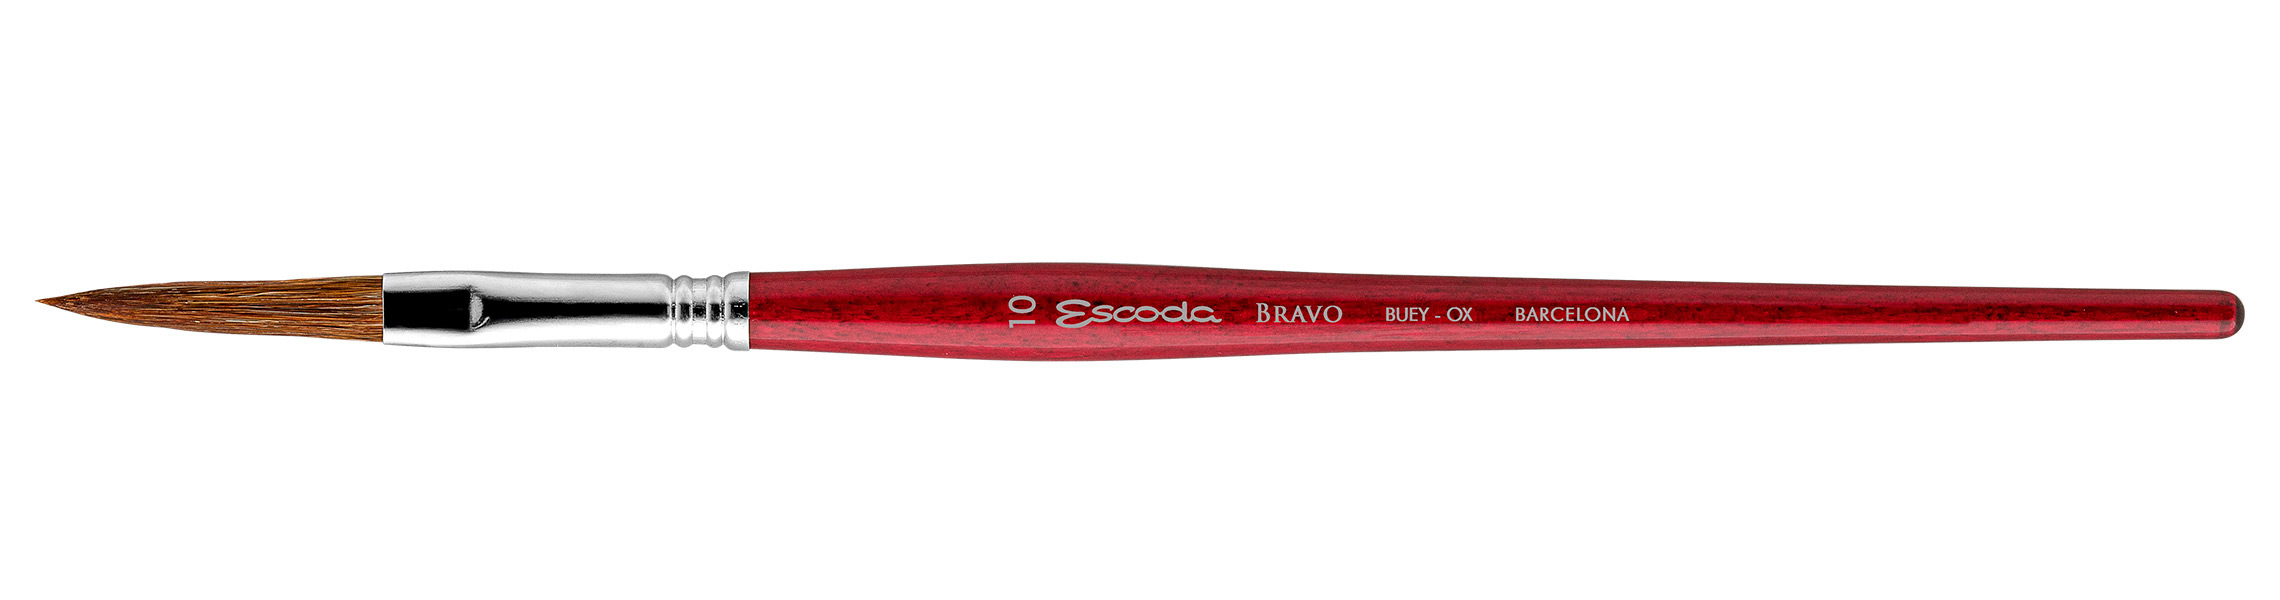 Escoda brushes serie 6218